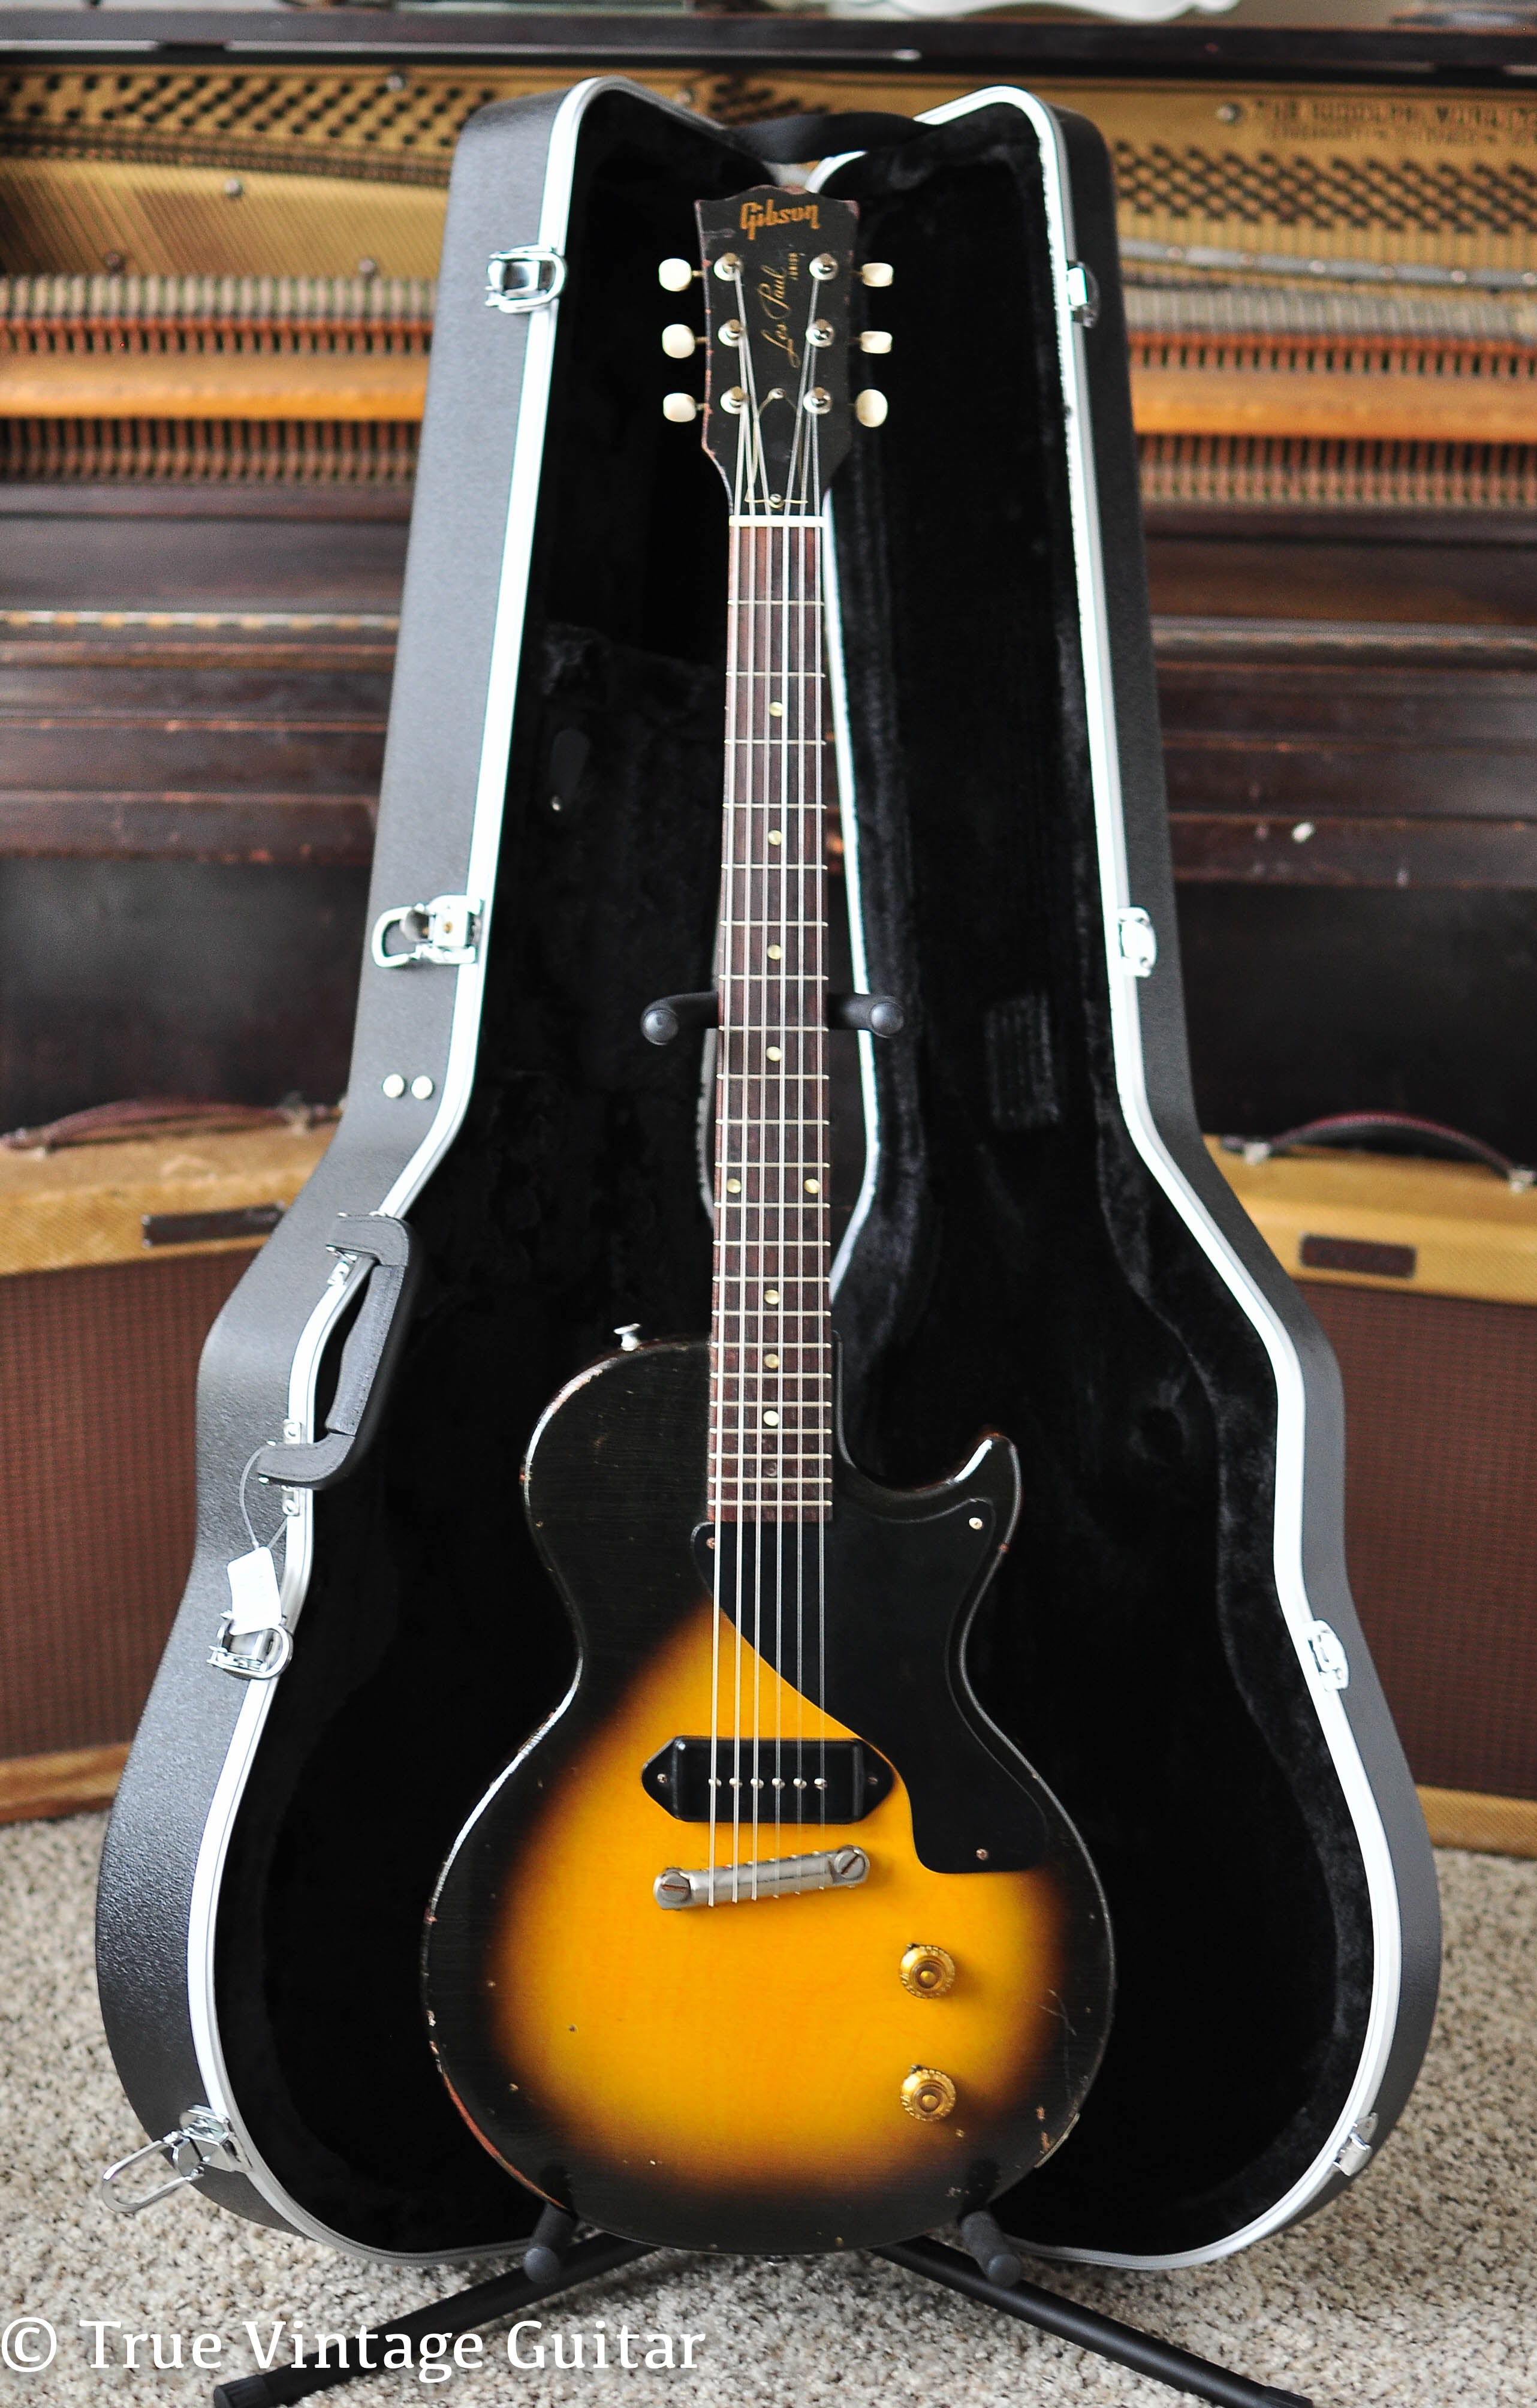 Vintage 1956 Gibson Les Paul Junior guitar